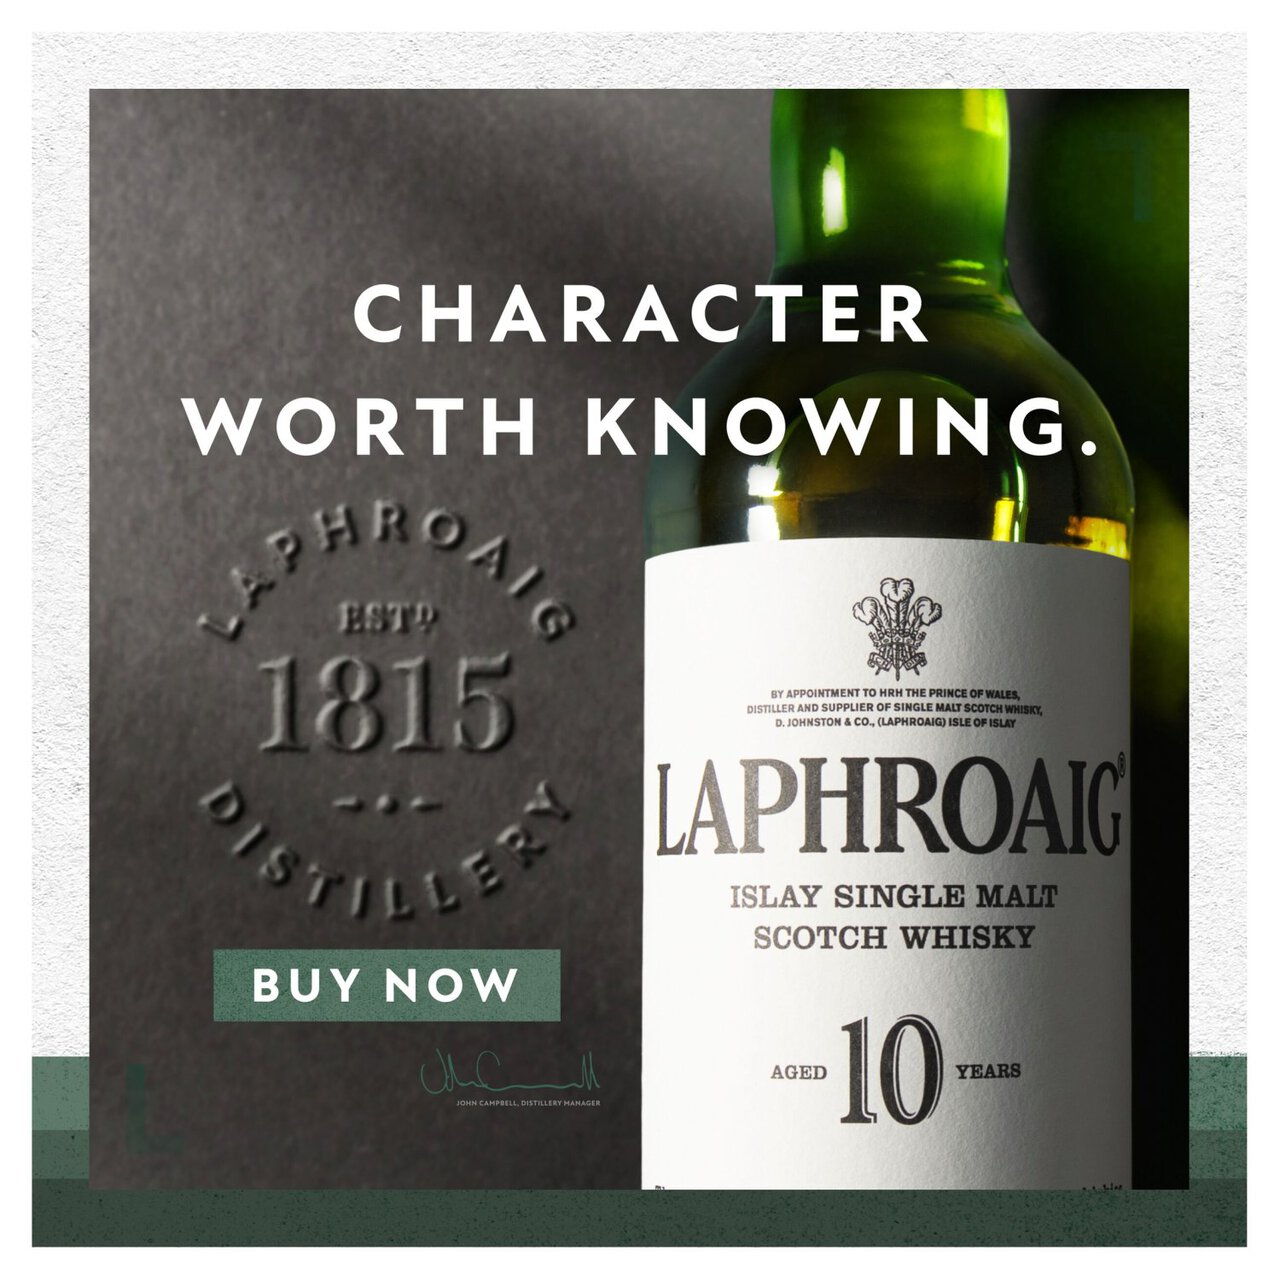 Laphroaig 10 Year Old Islay Single Malt Scotch Whisky 70cl